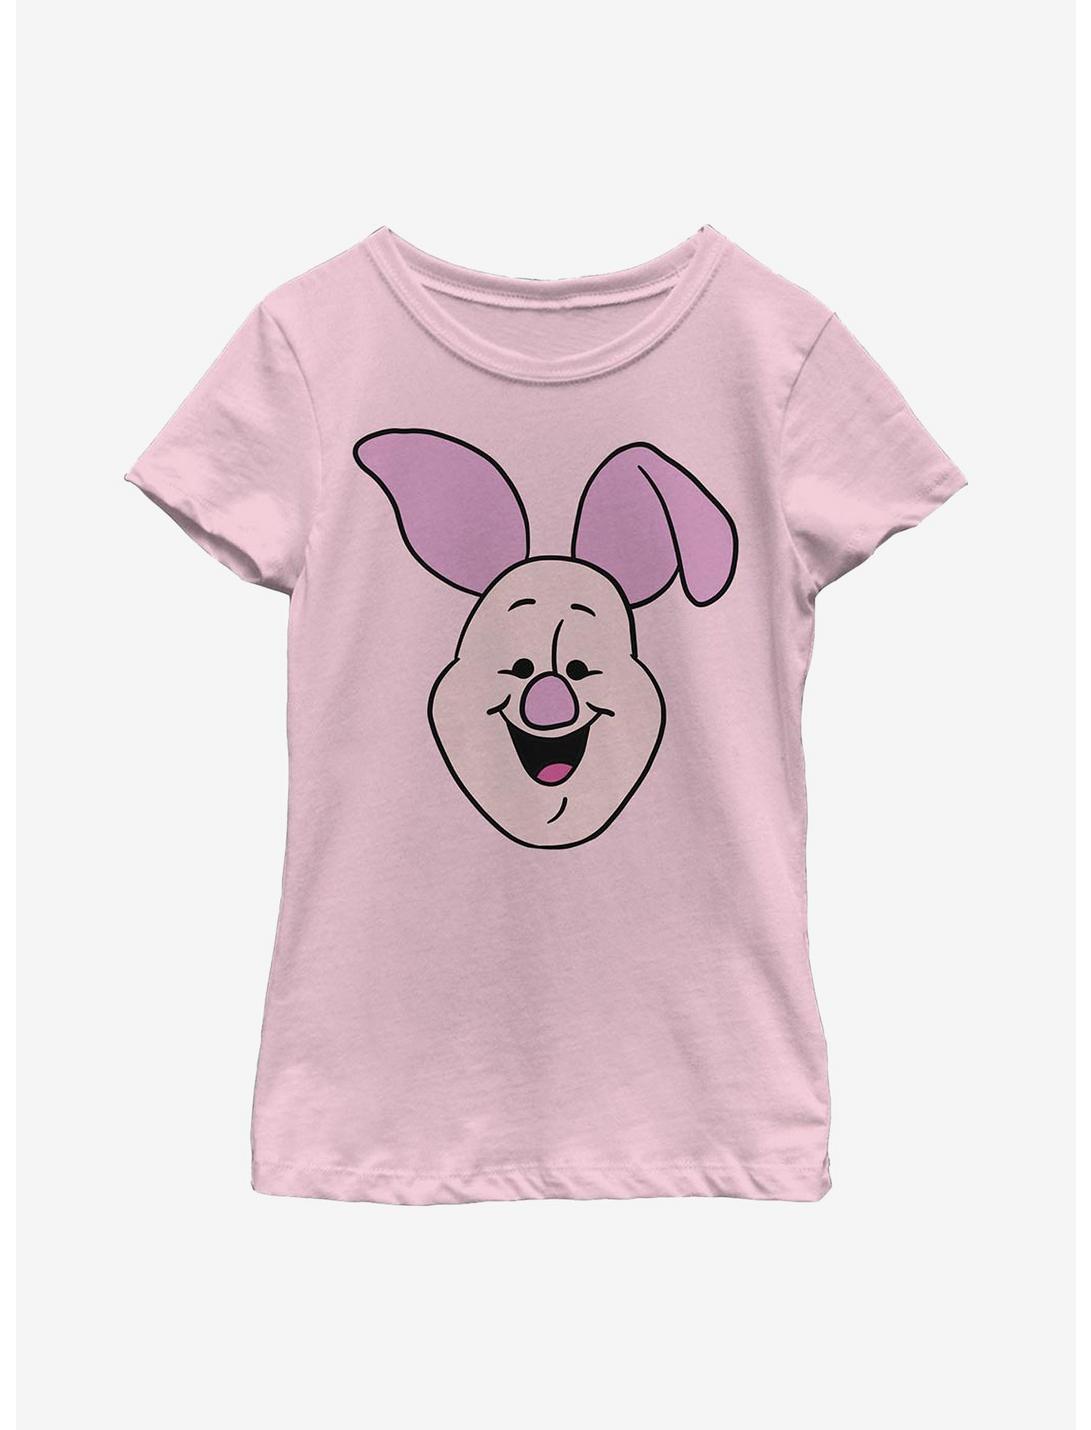 Disney Winnie The Pooh Piglet Big Face Youth Girls T-Shirt, PINK, hi-res